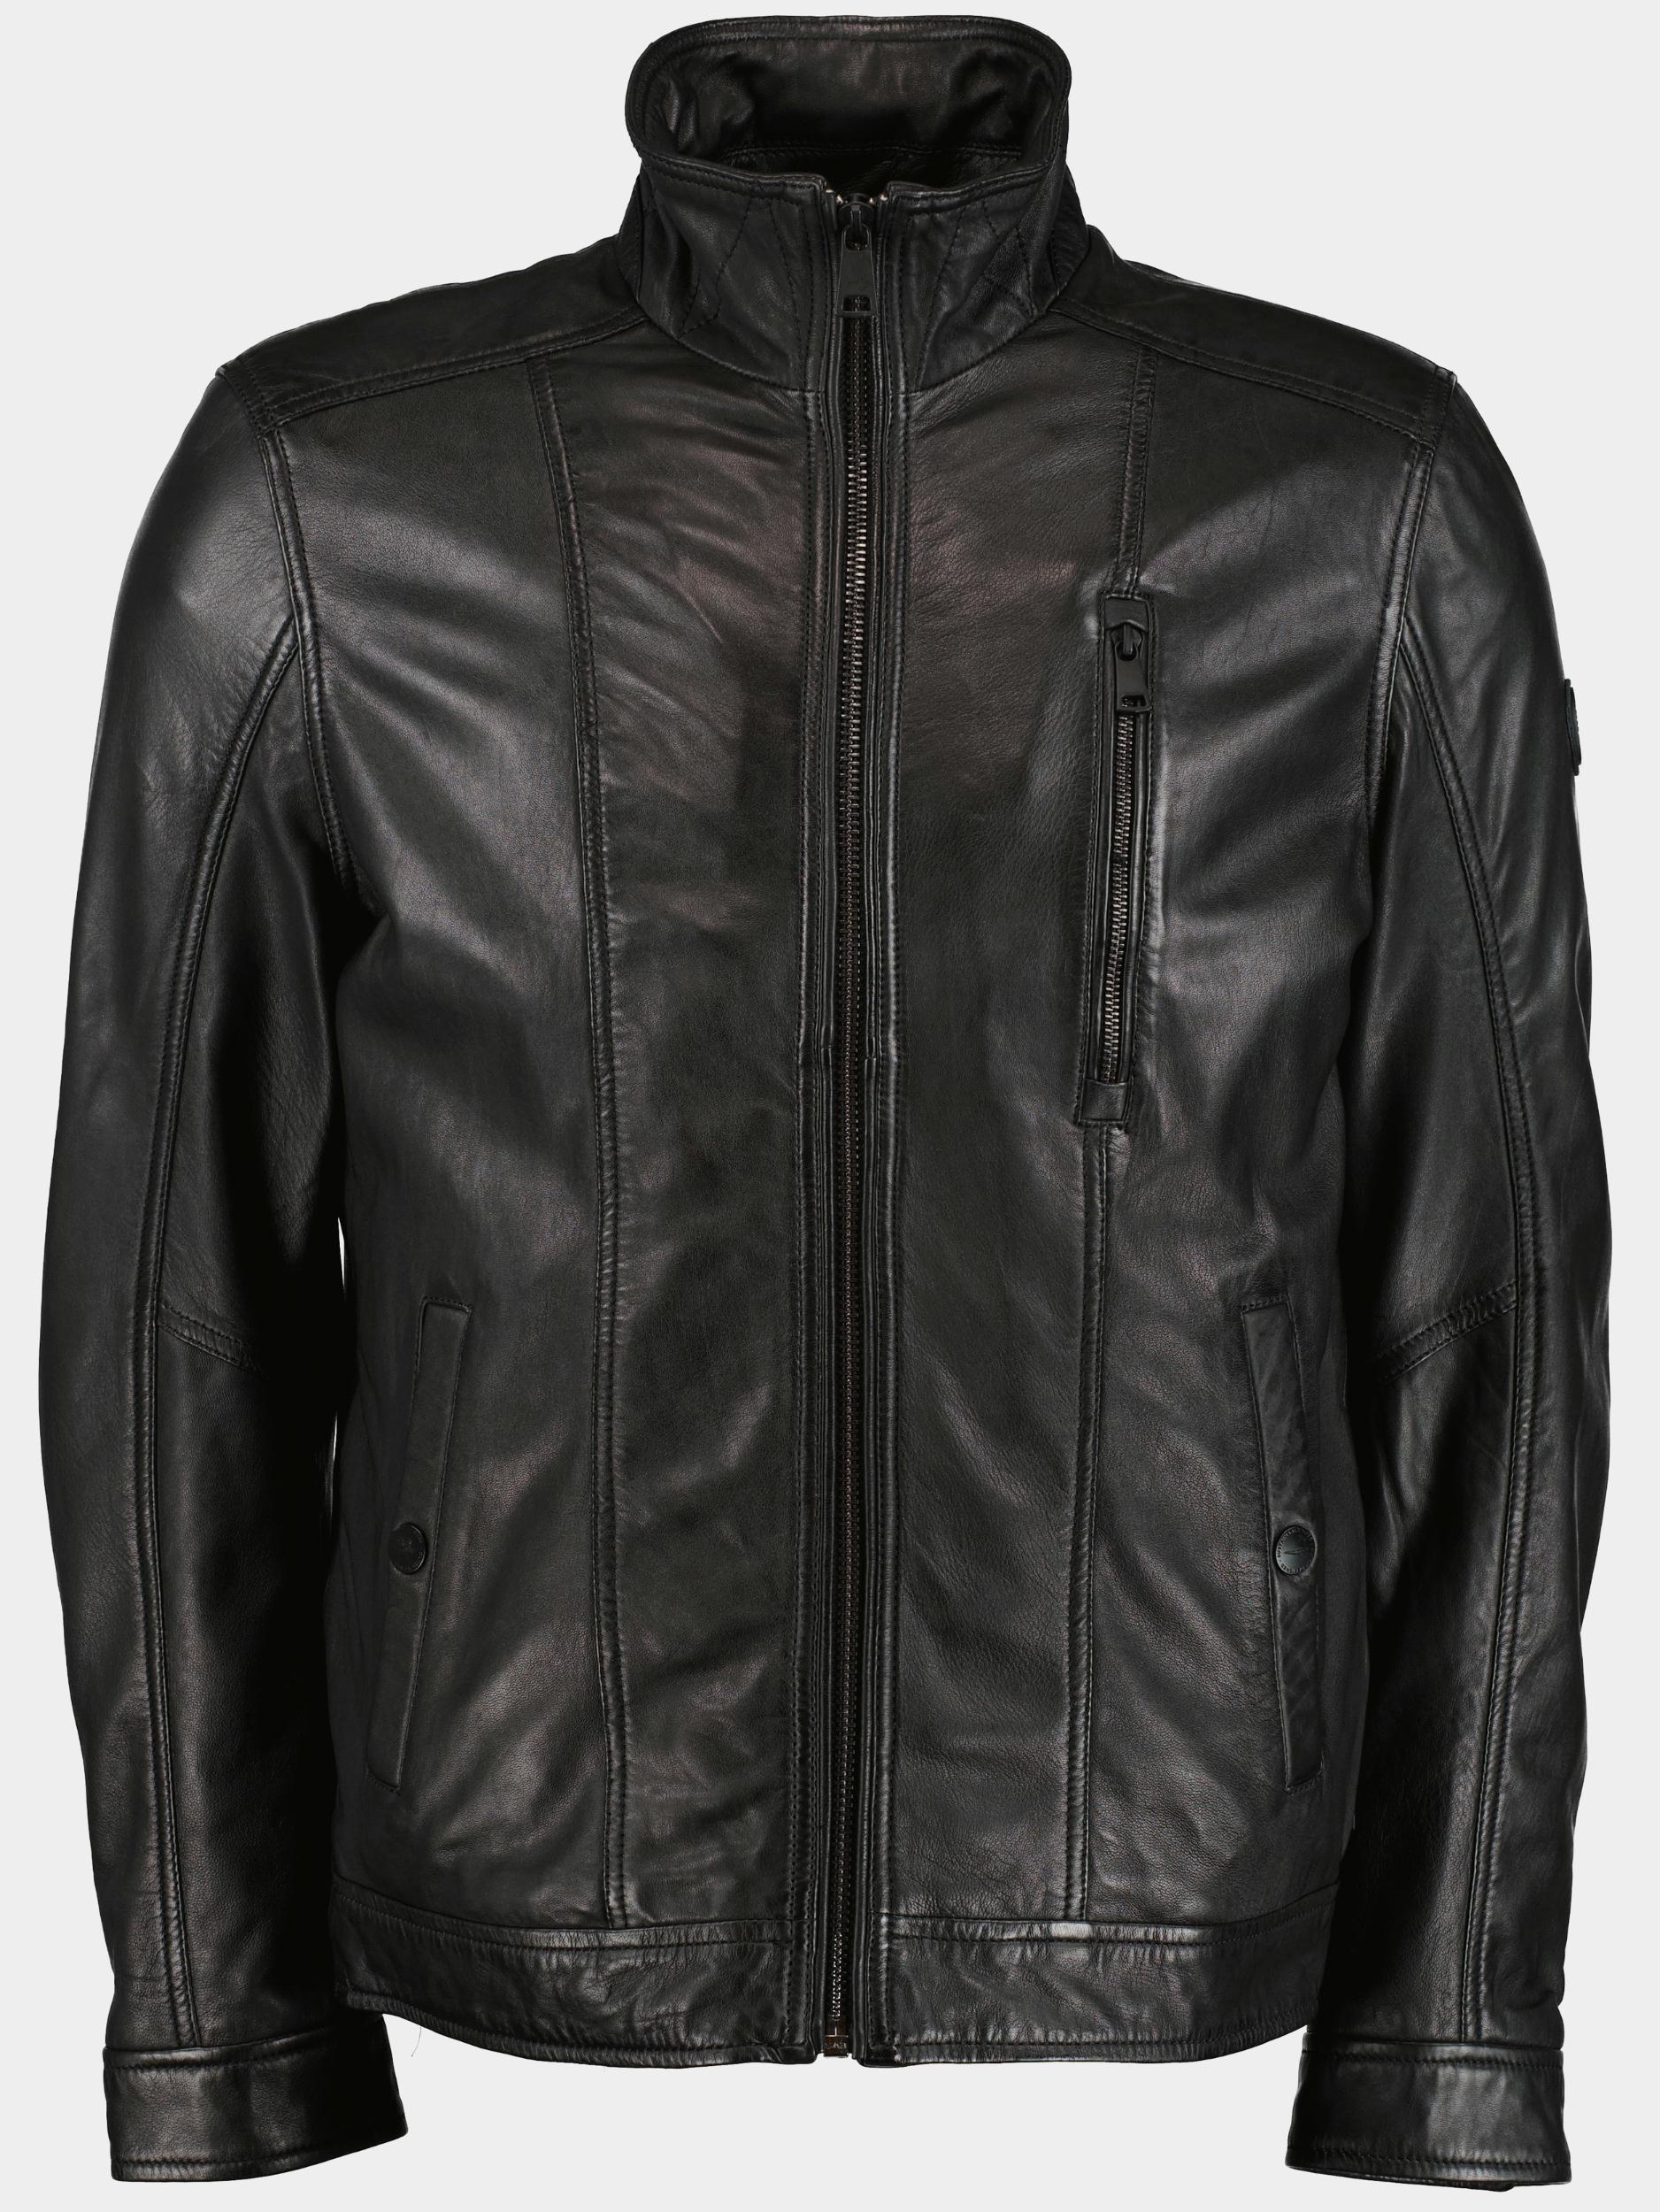 Afbeelding van DNR Lederen jack leather jacket 52349.2/999